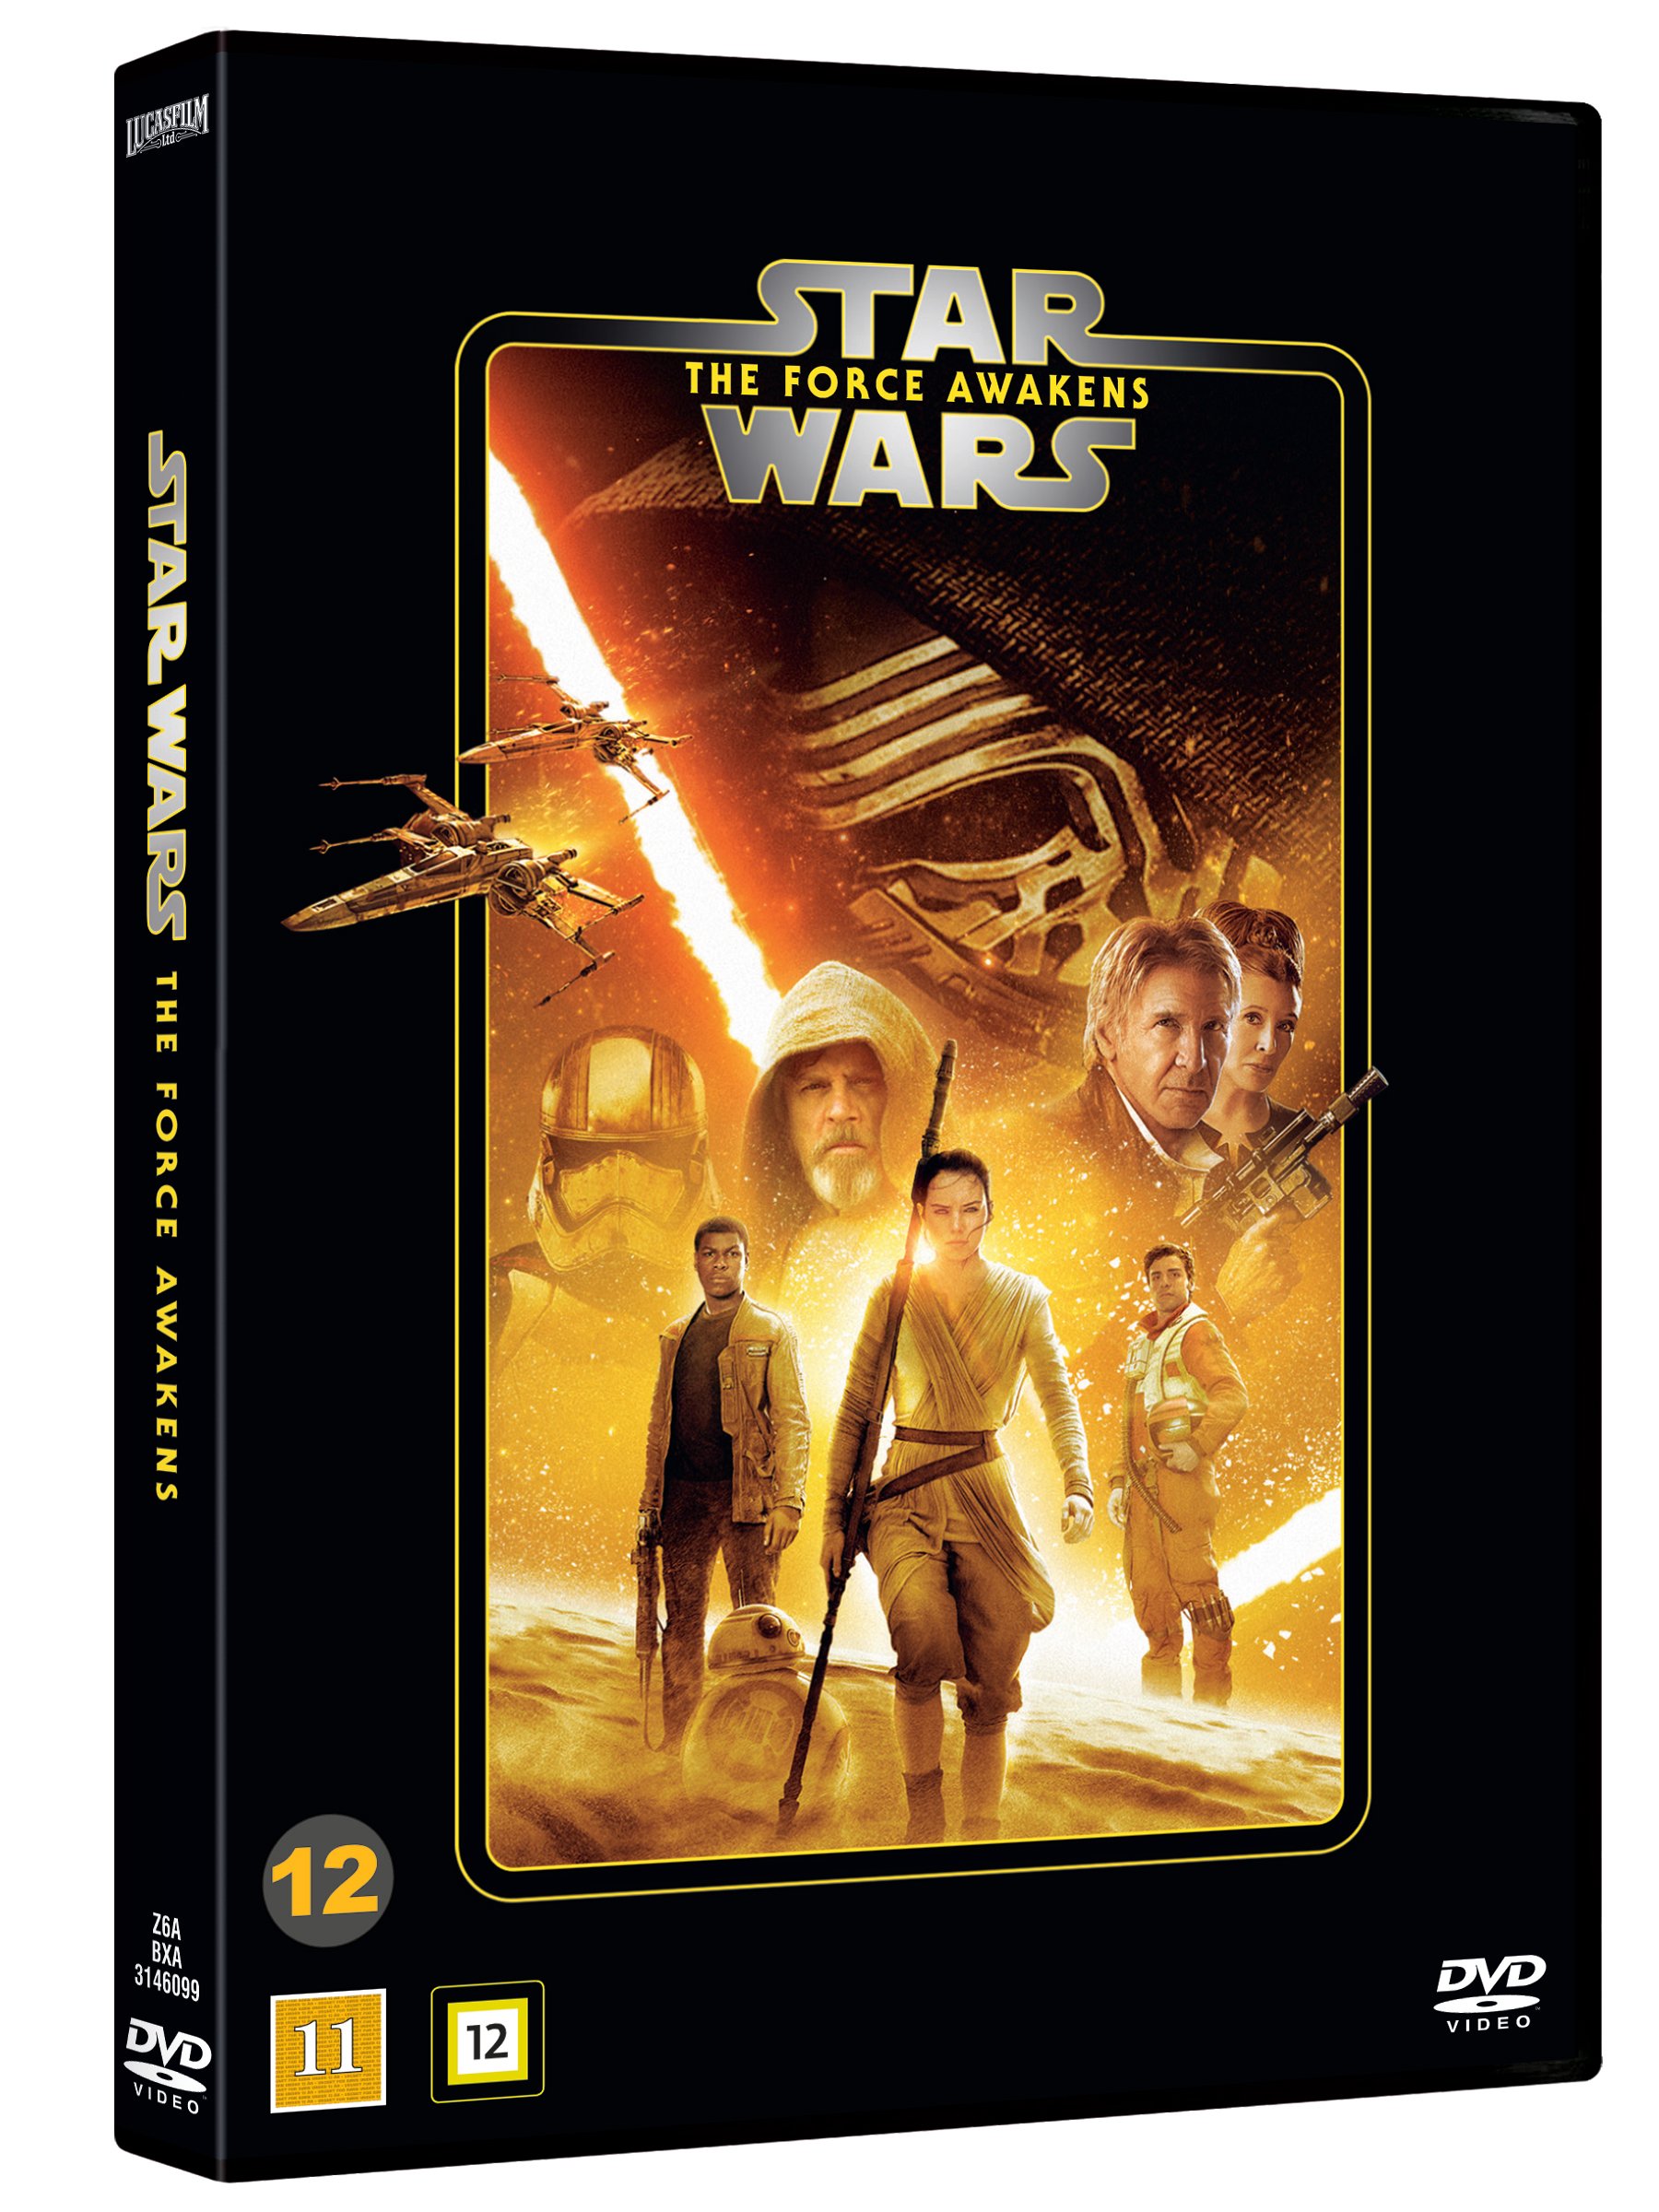 instal the last version for iphoneStar Wars Ep. VIII: The Last Jedi